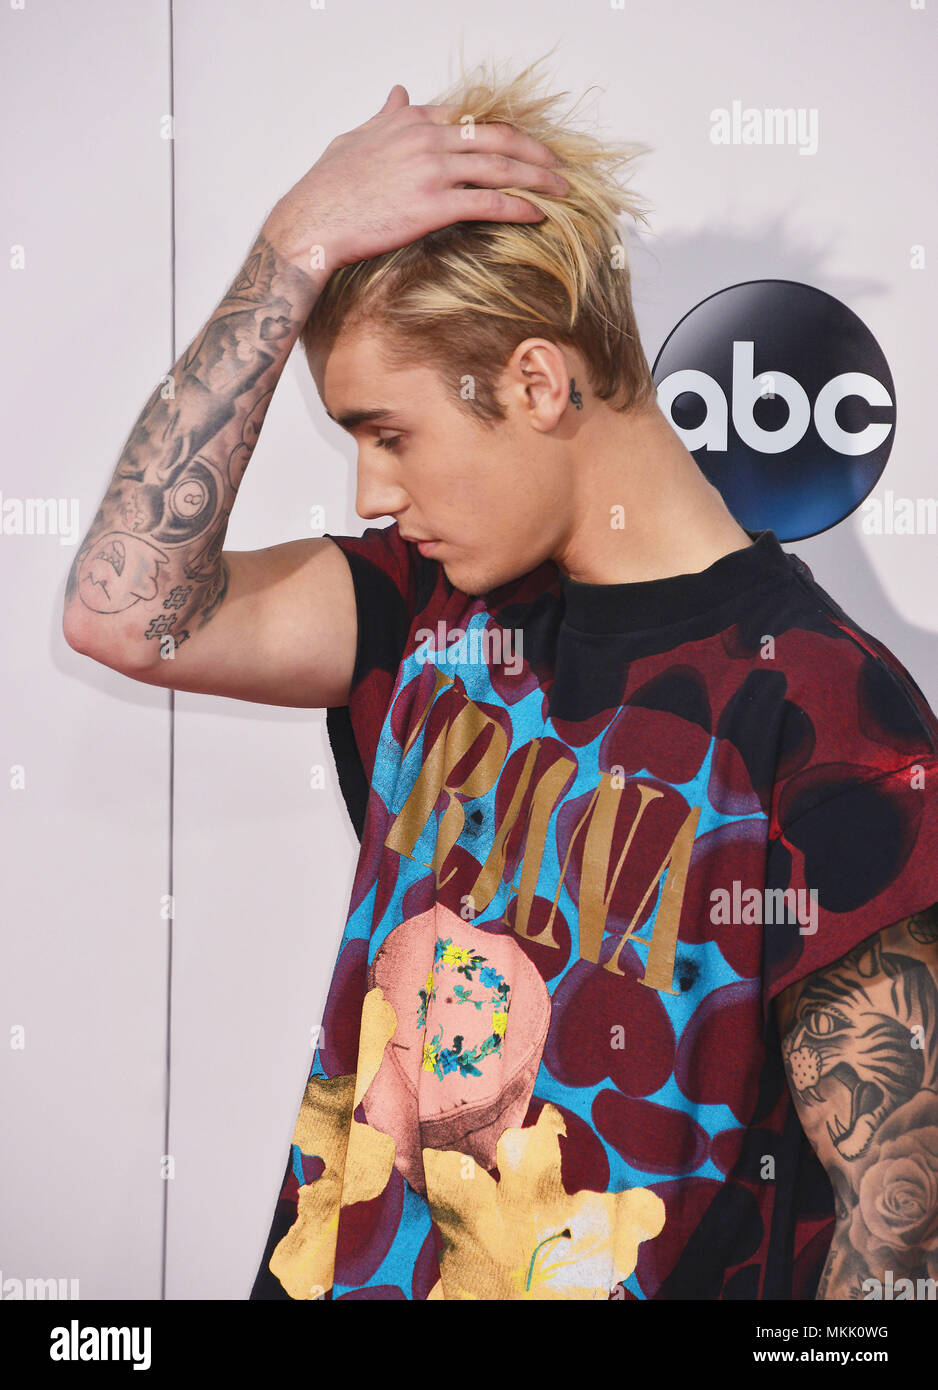 Justin Bieber News, Music, Photos And Videos – Hollywood Life